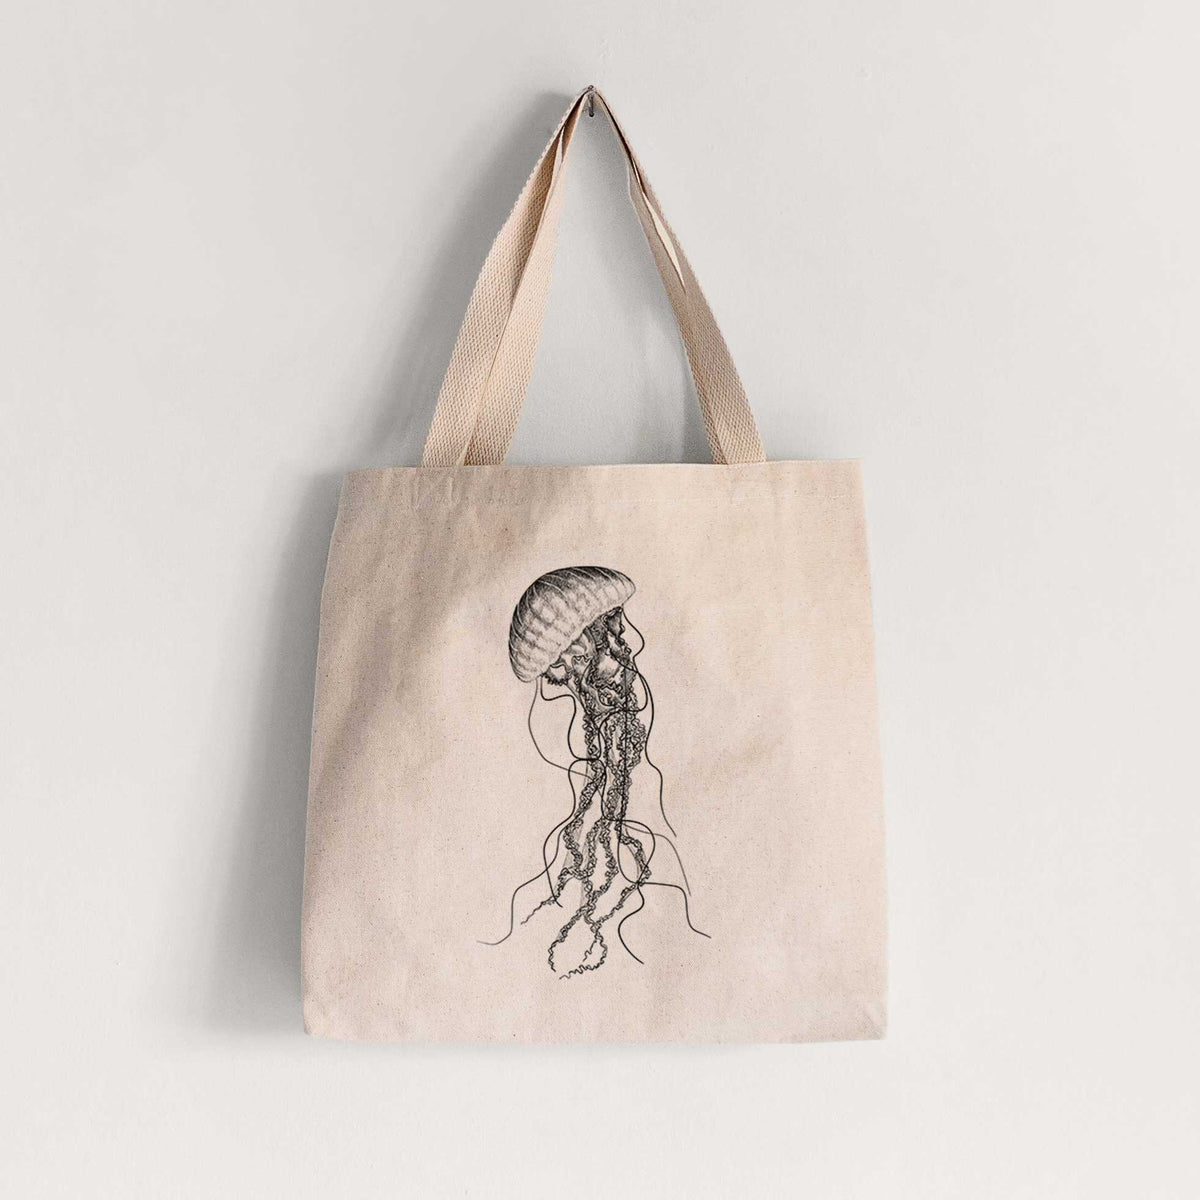 Black Sea Nettle Jellyfish - Chrysaora achlyos - Tote Bag